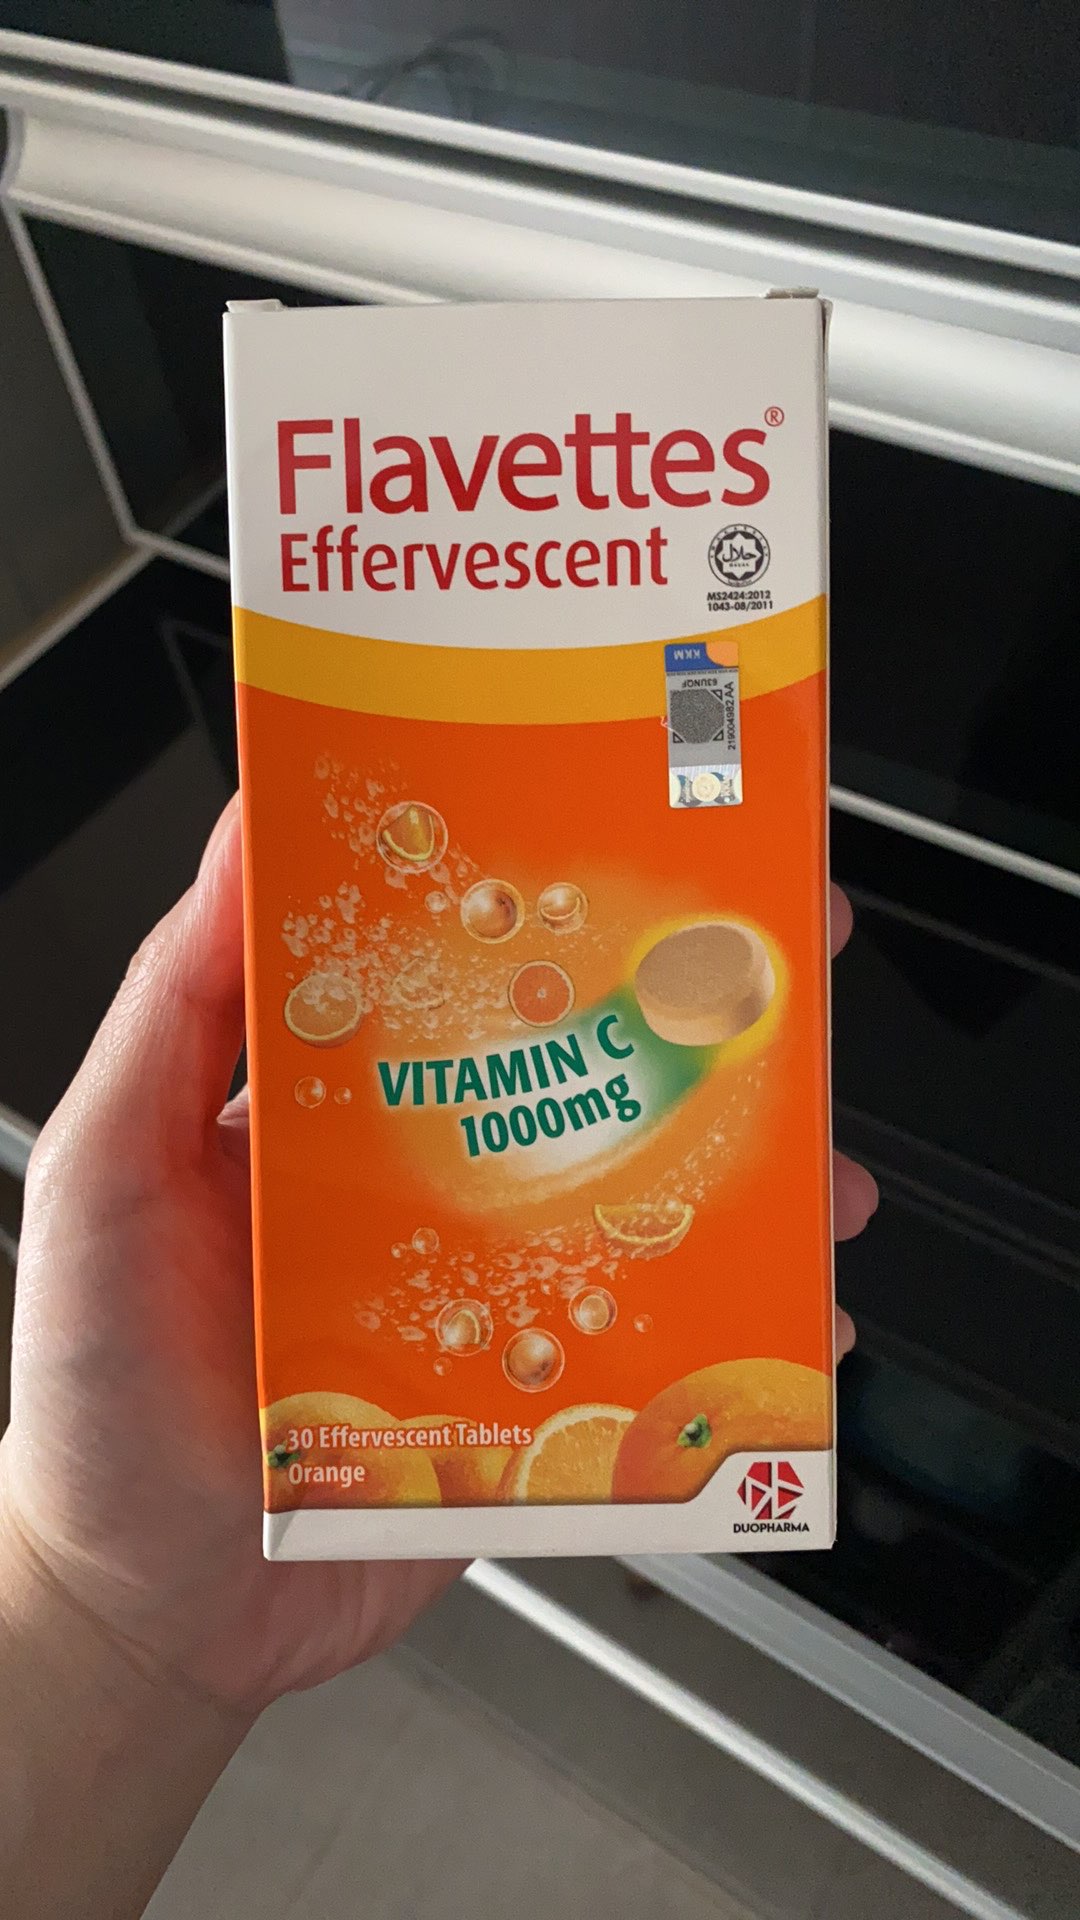 Flavettes Effervescent Vitamin C 1000mg Price